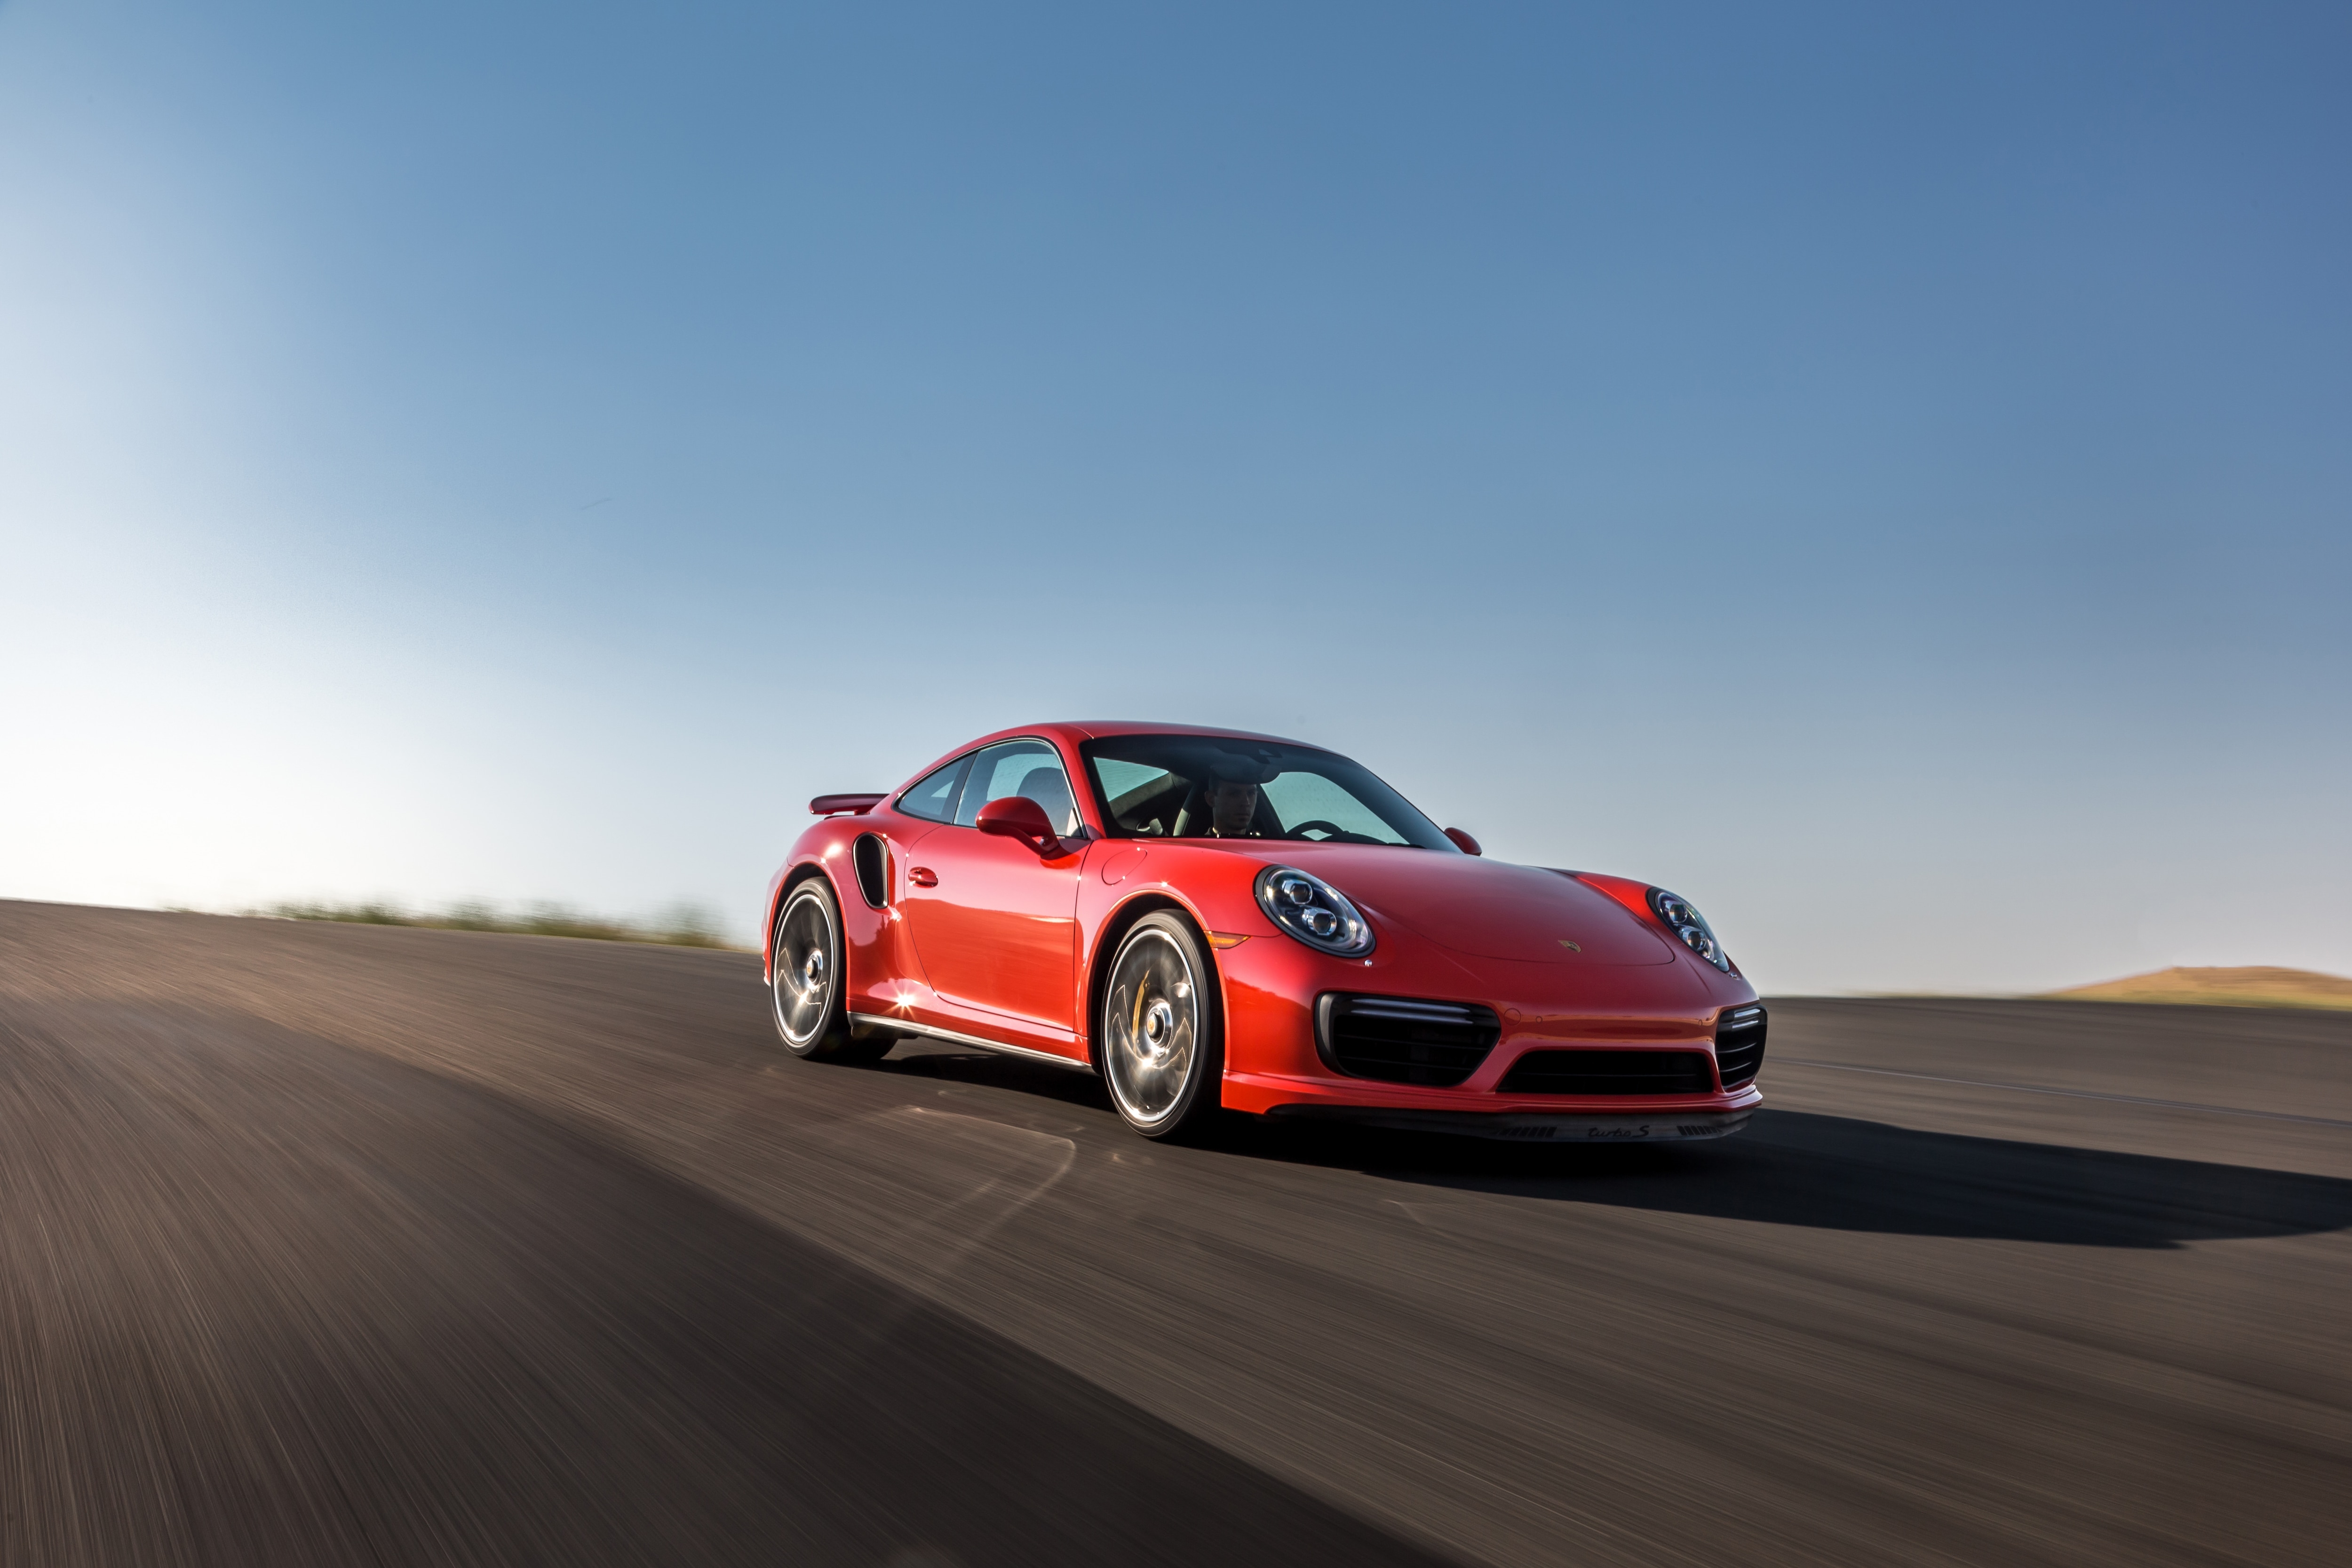 Desktop wallpaper with a red Porsche 911 in motion